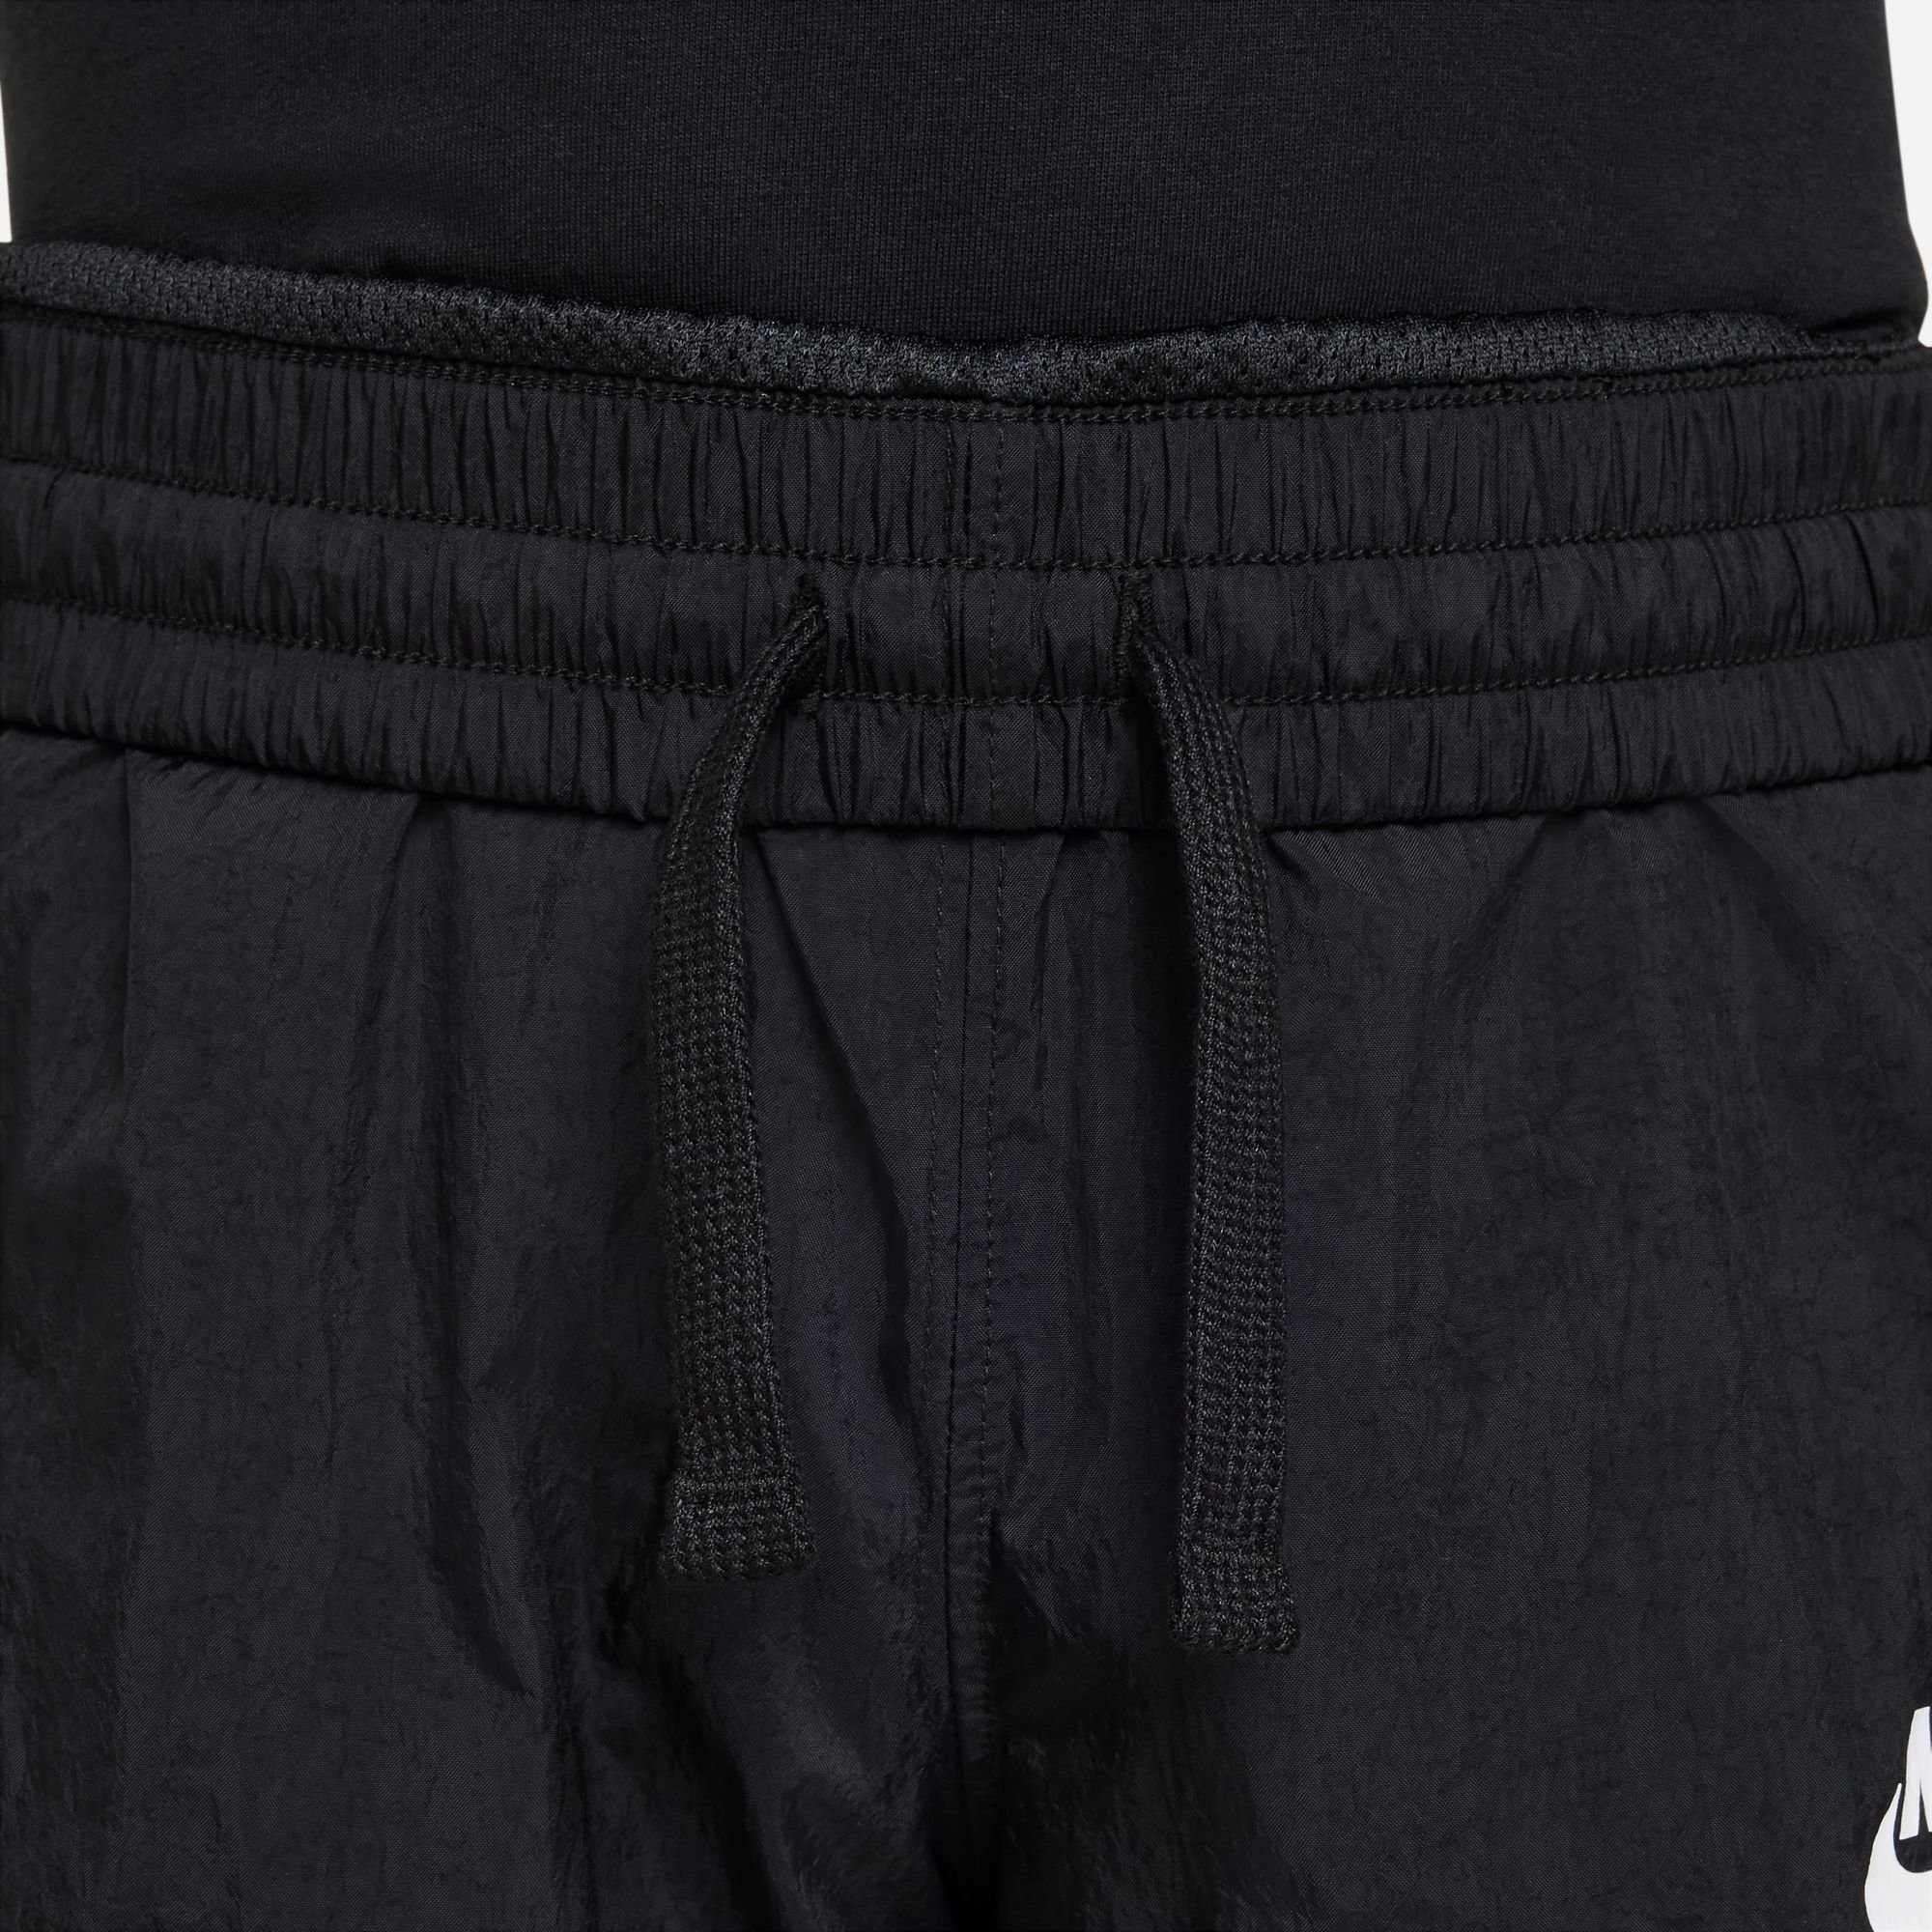 KIDS' BIG Sportswear TRACKSUIT Nike Trainingsanzug BLACK/BLACK/WHITE